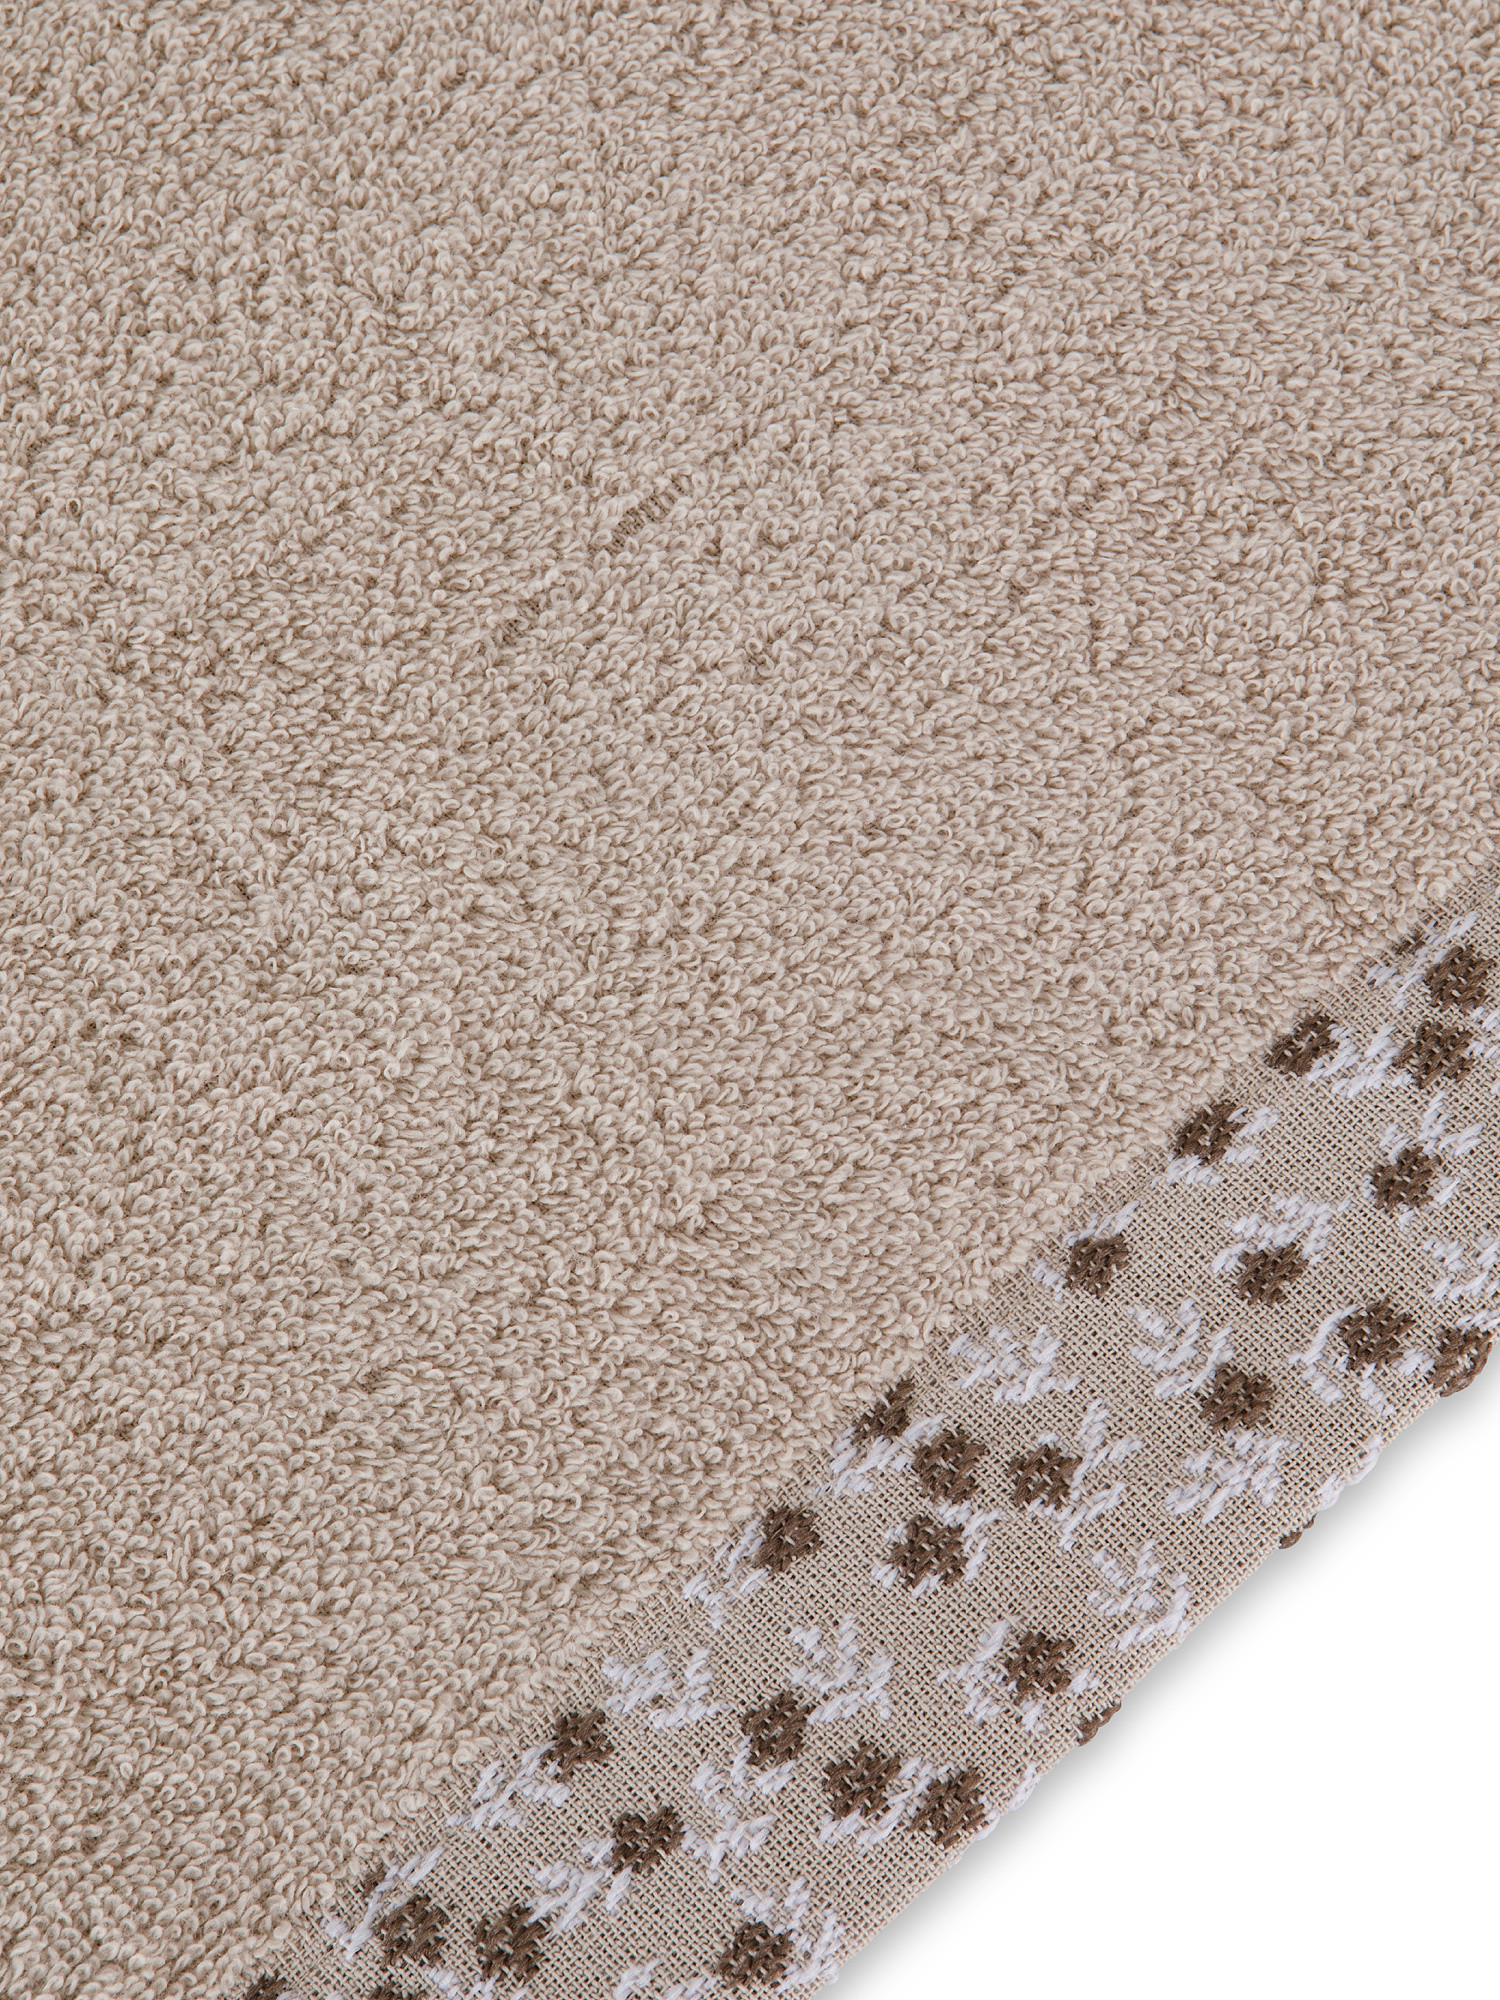 Asciugamano spugna di cotone bordo floreale, Beige, large image number 2